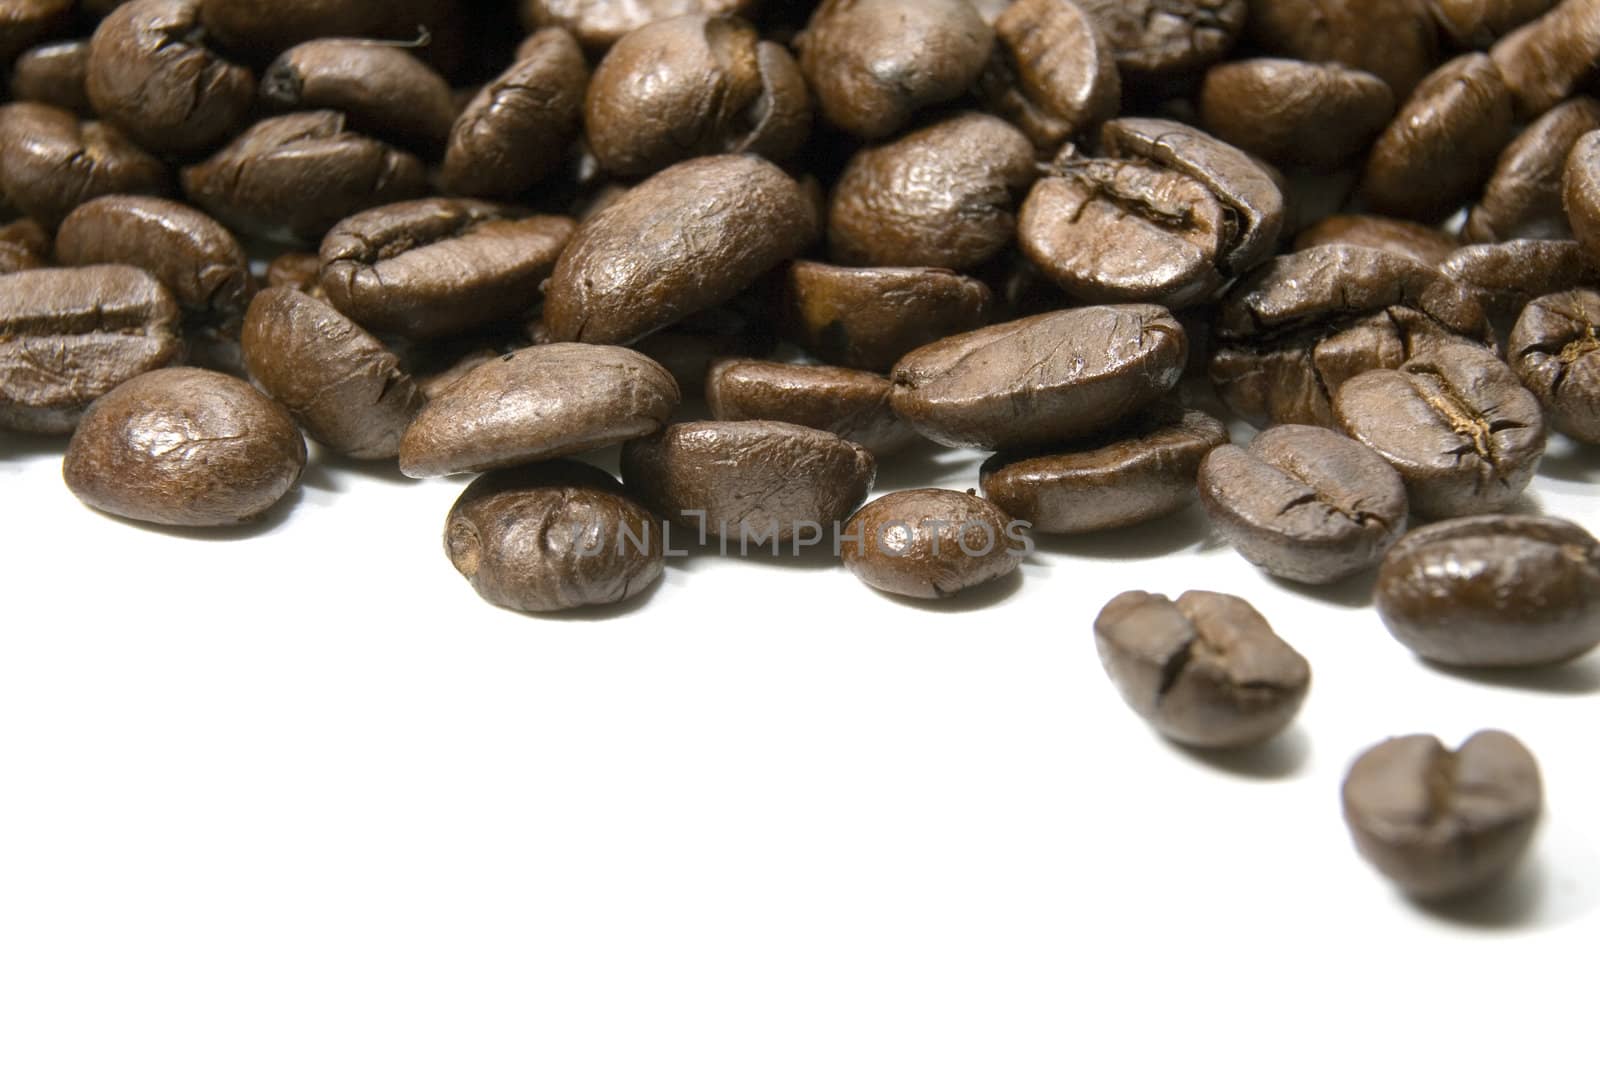 Coffee beans by Vladimir